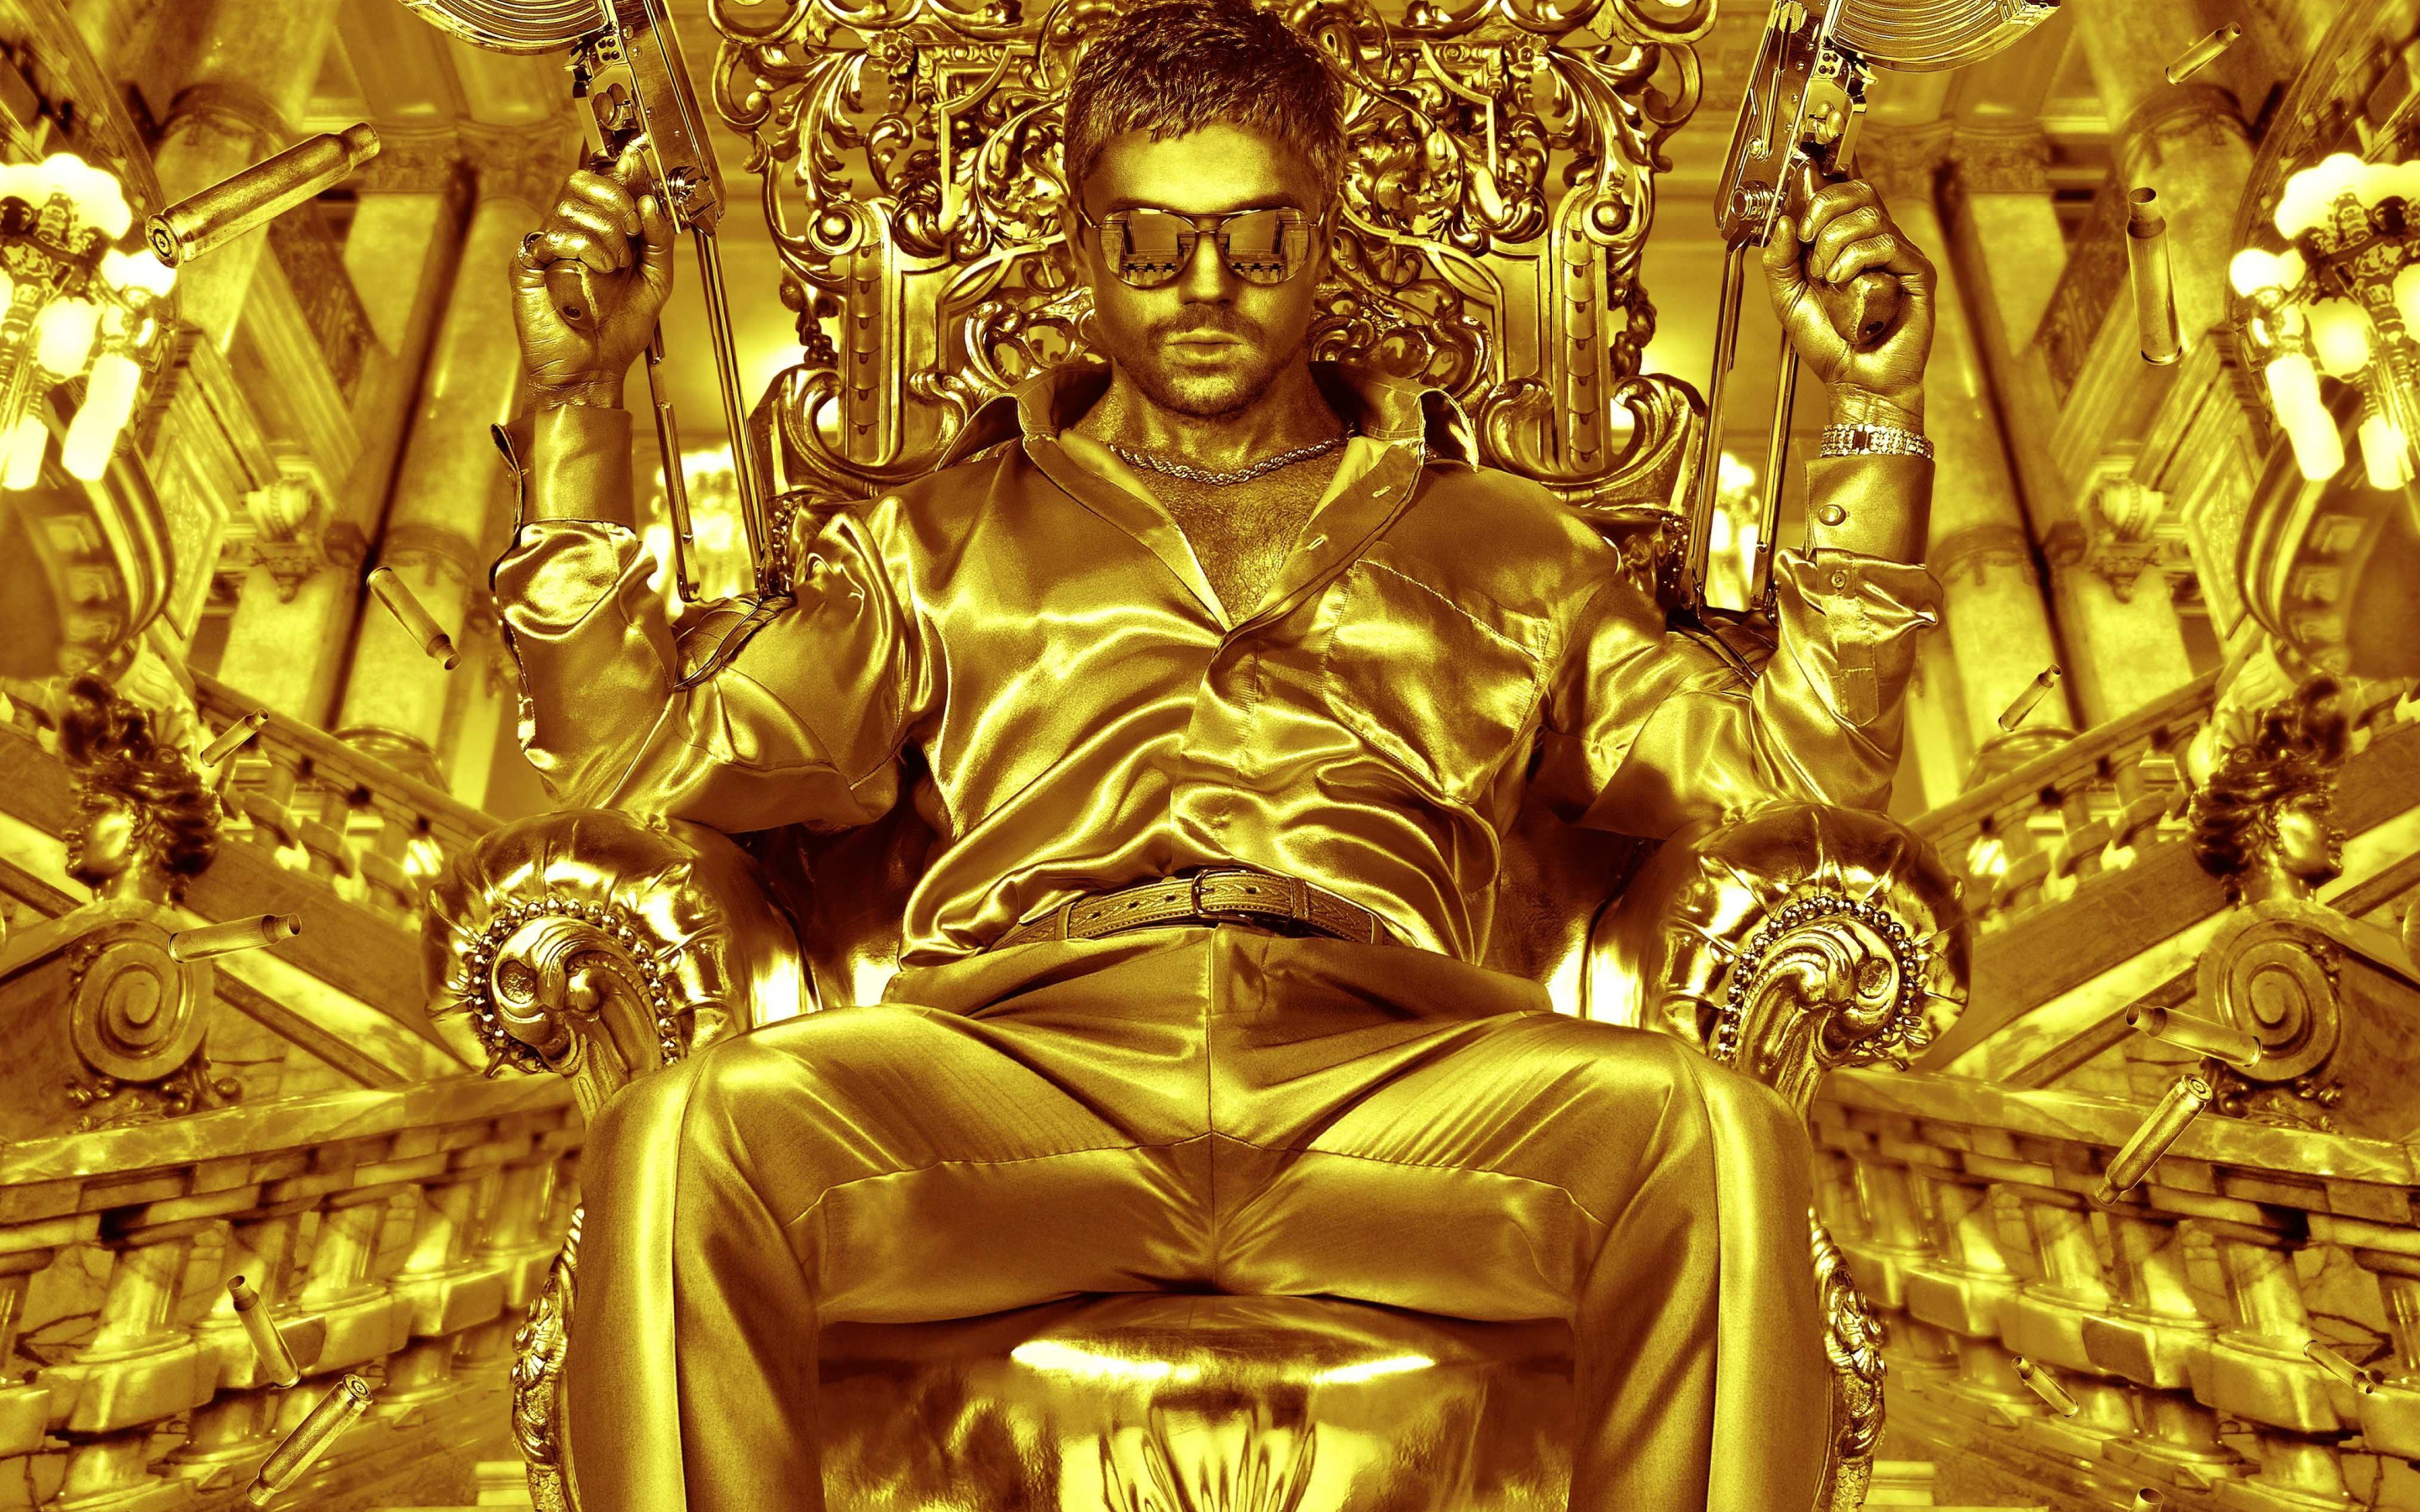 Golden throne music volvo s80 long